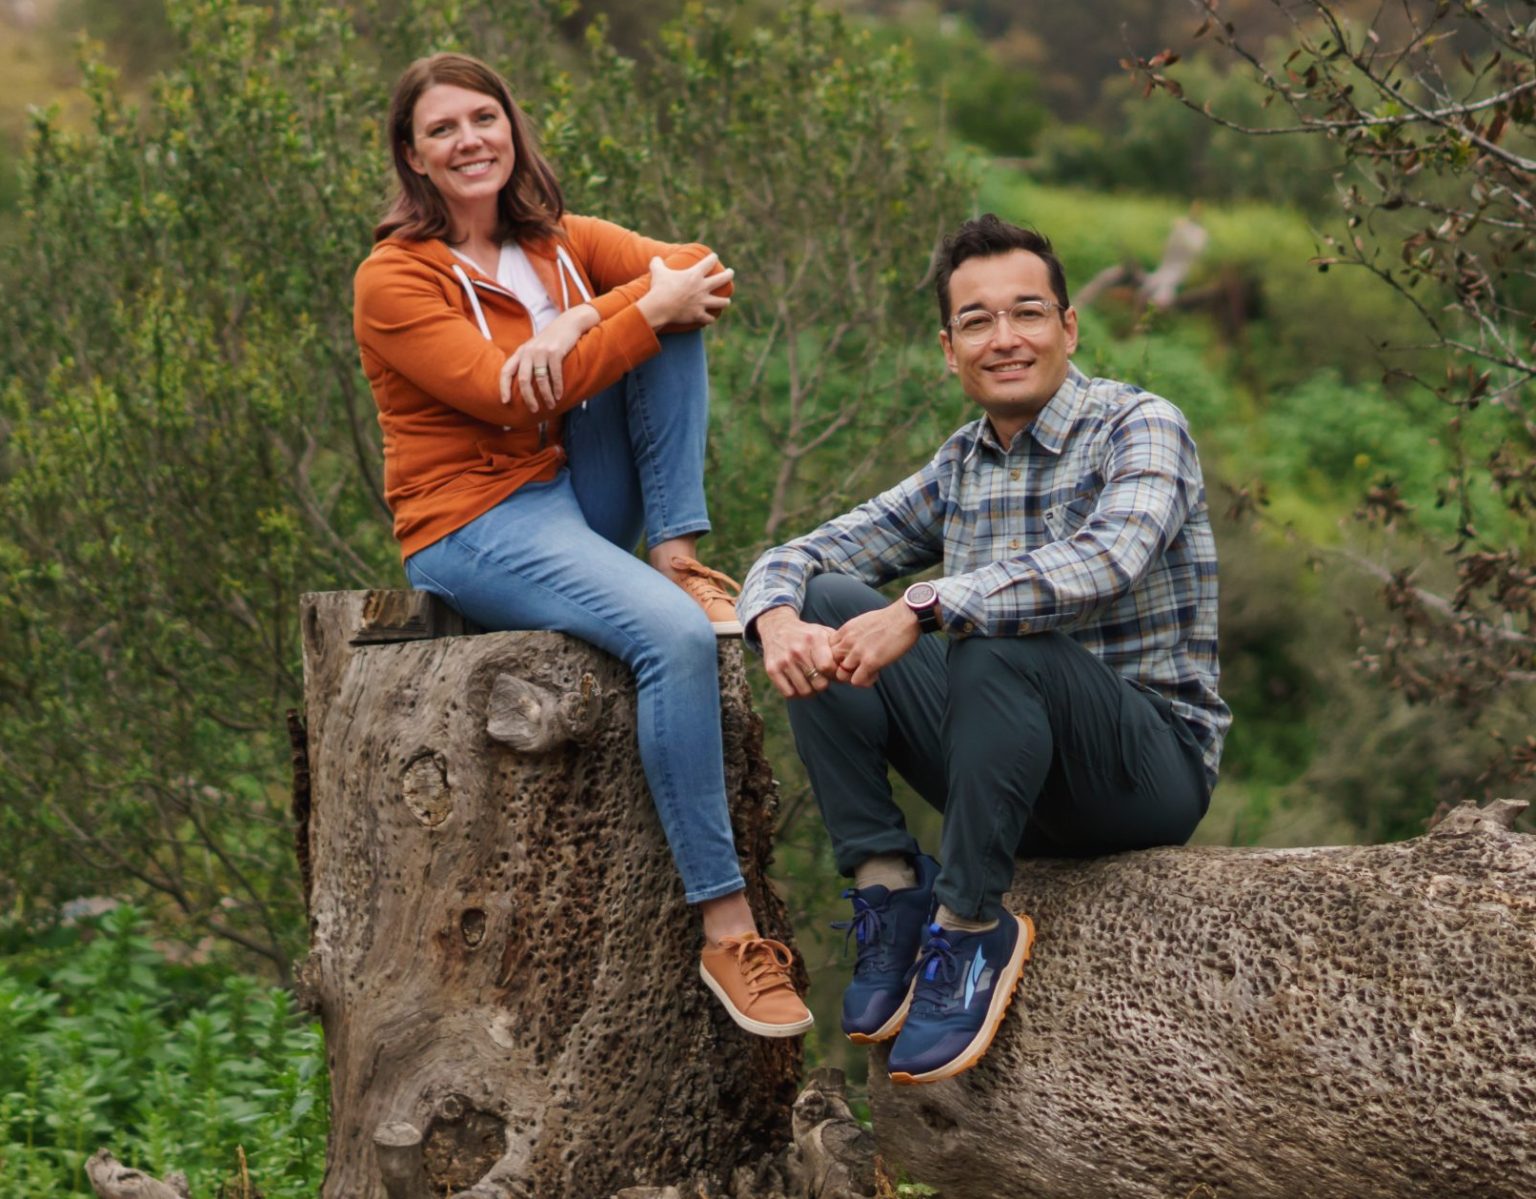 Rebecca and Ren sitting on a tree stump